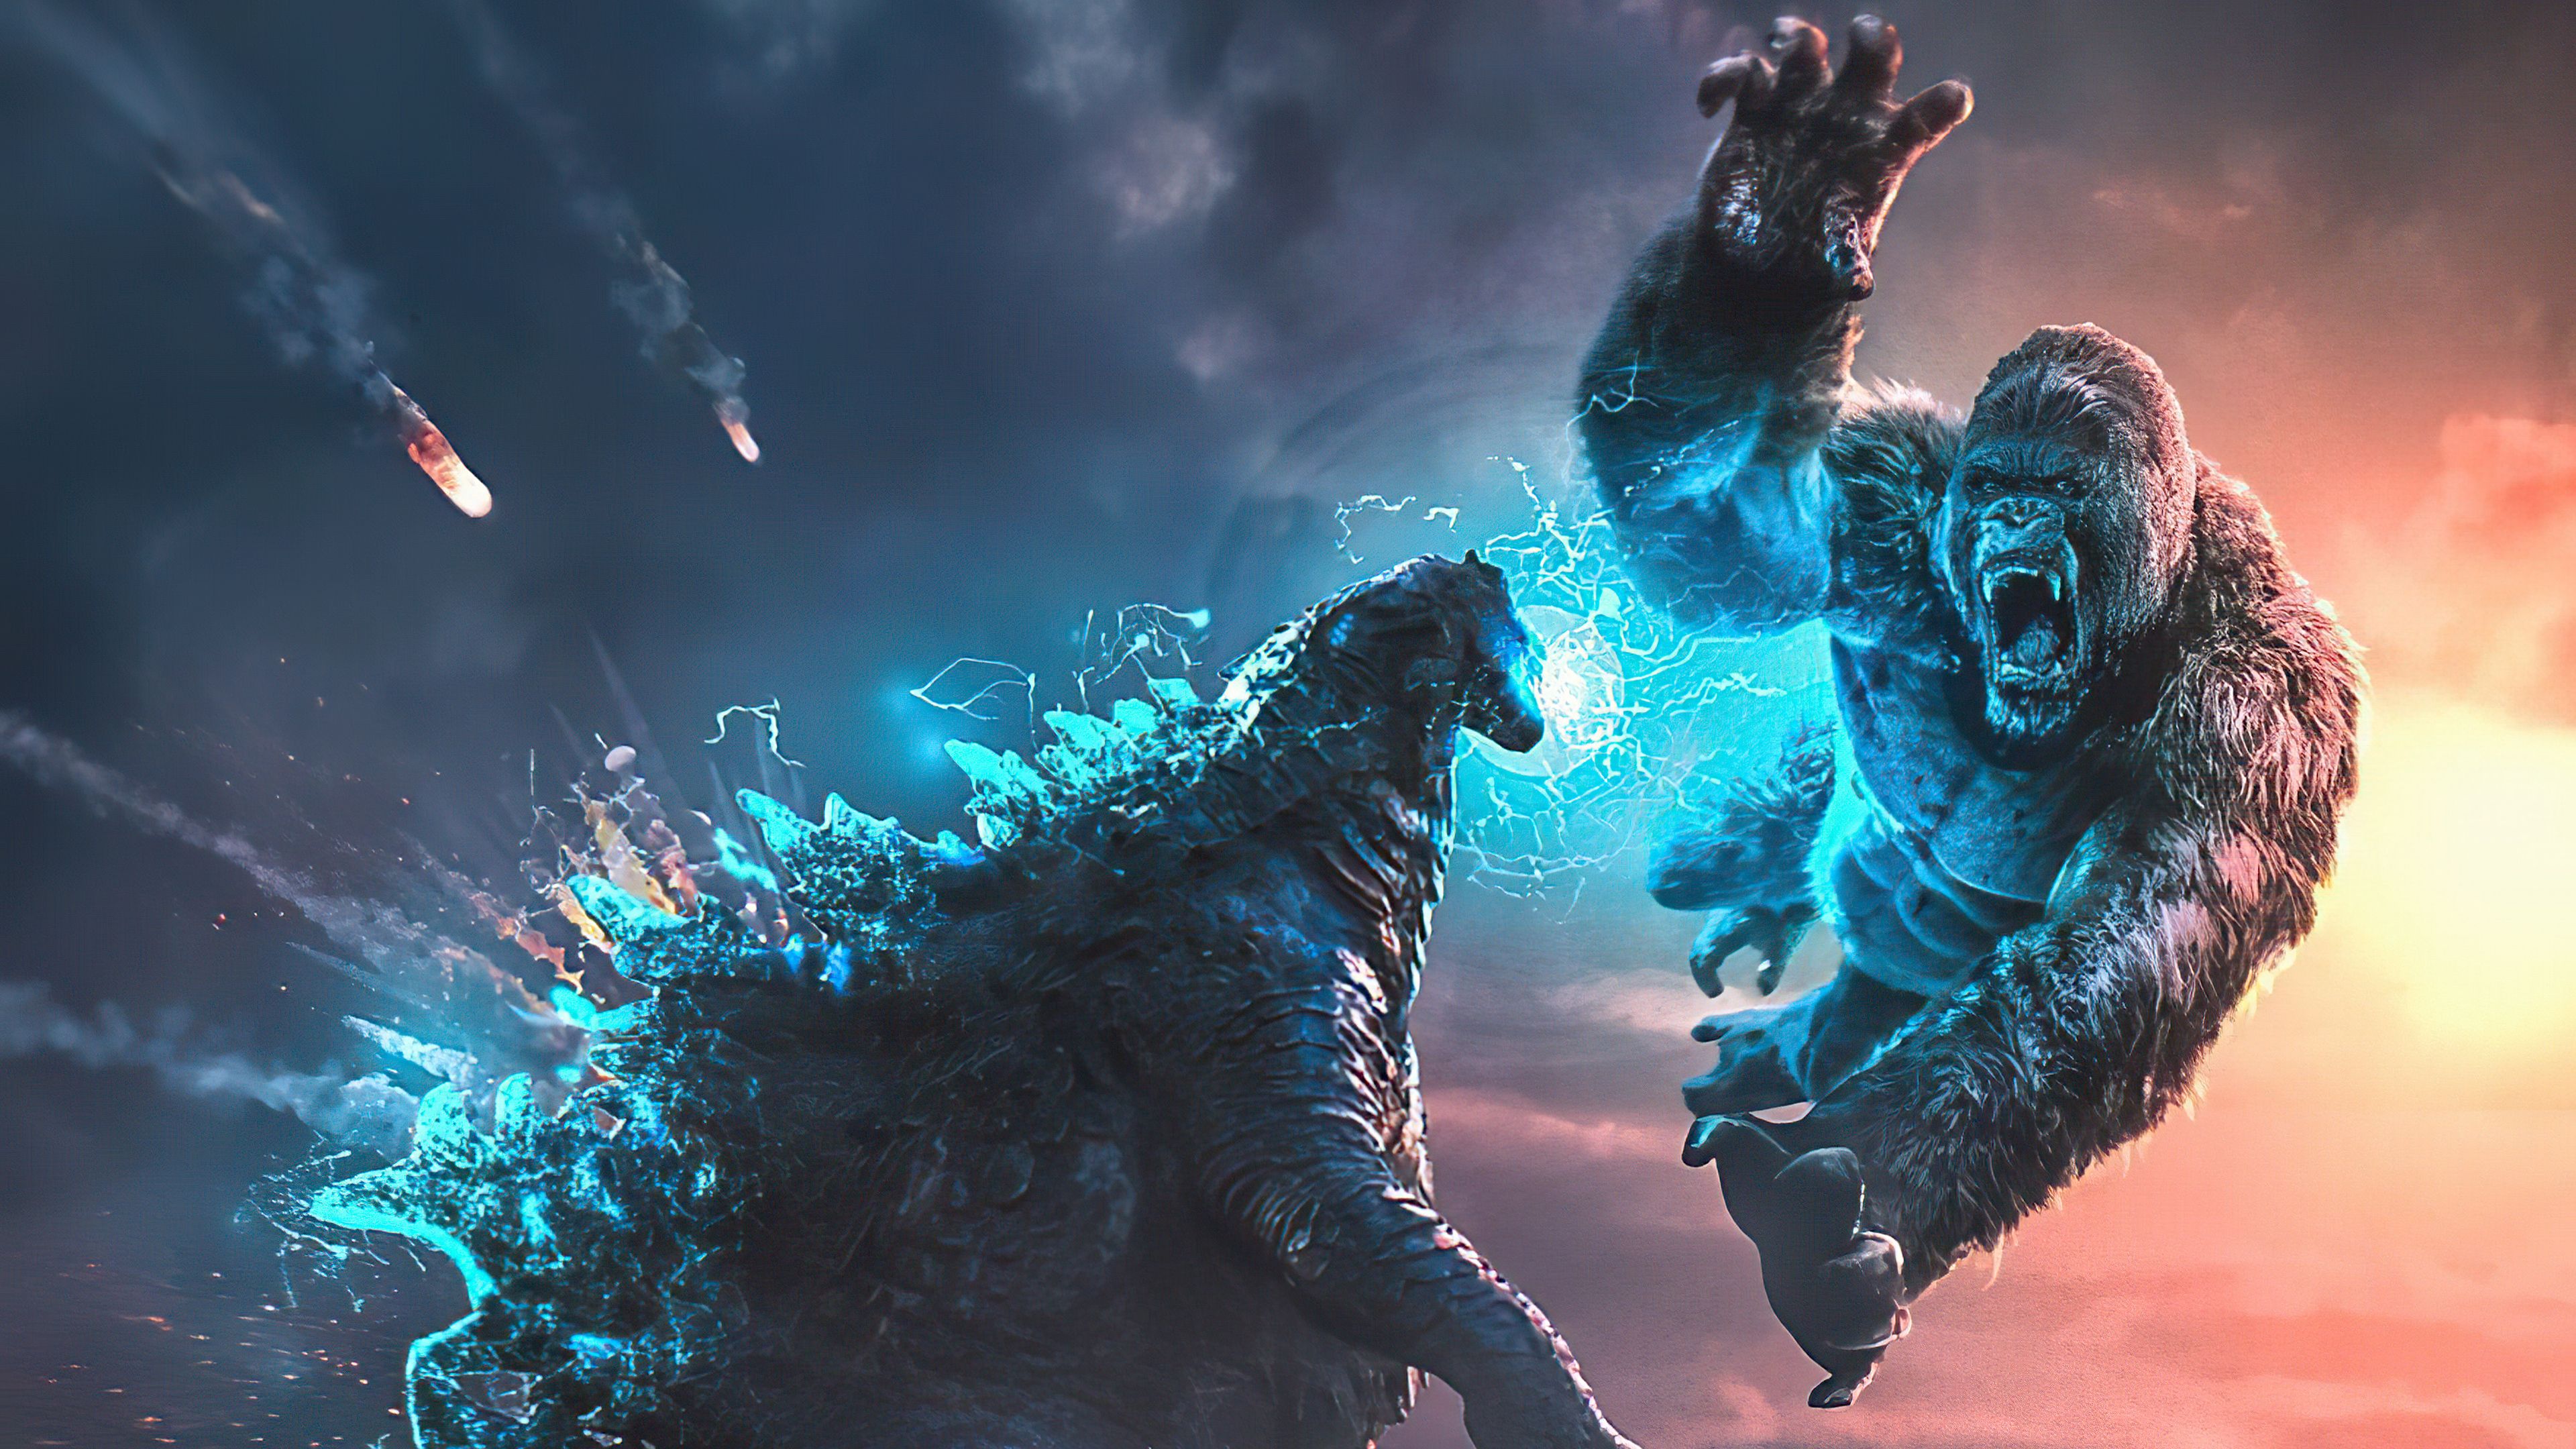 Kong V Godzilla 4k, HD Movies, 4k Wallpapers, Image, Backgrounds, Photos an...